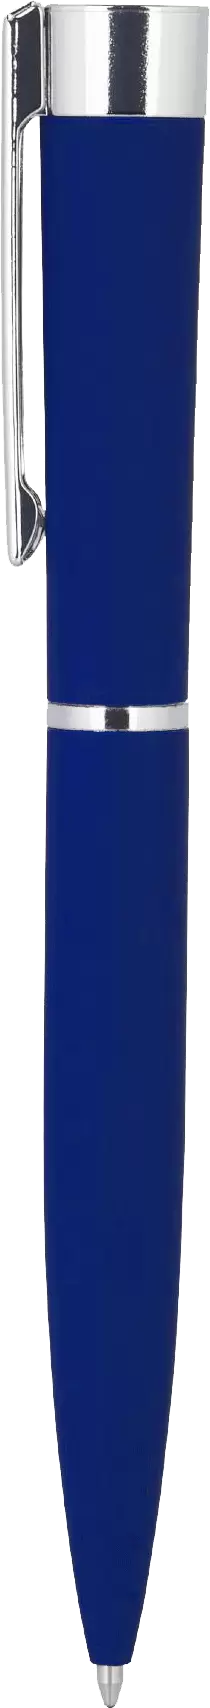 Ручка GROM SOFT MIRROR Темно-синяя 1126-14